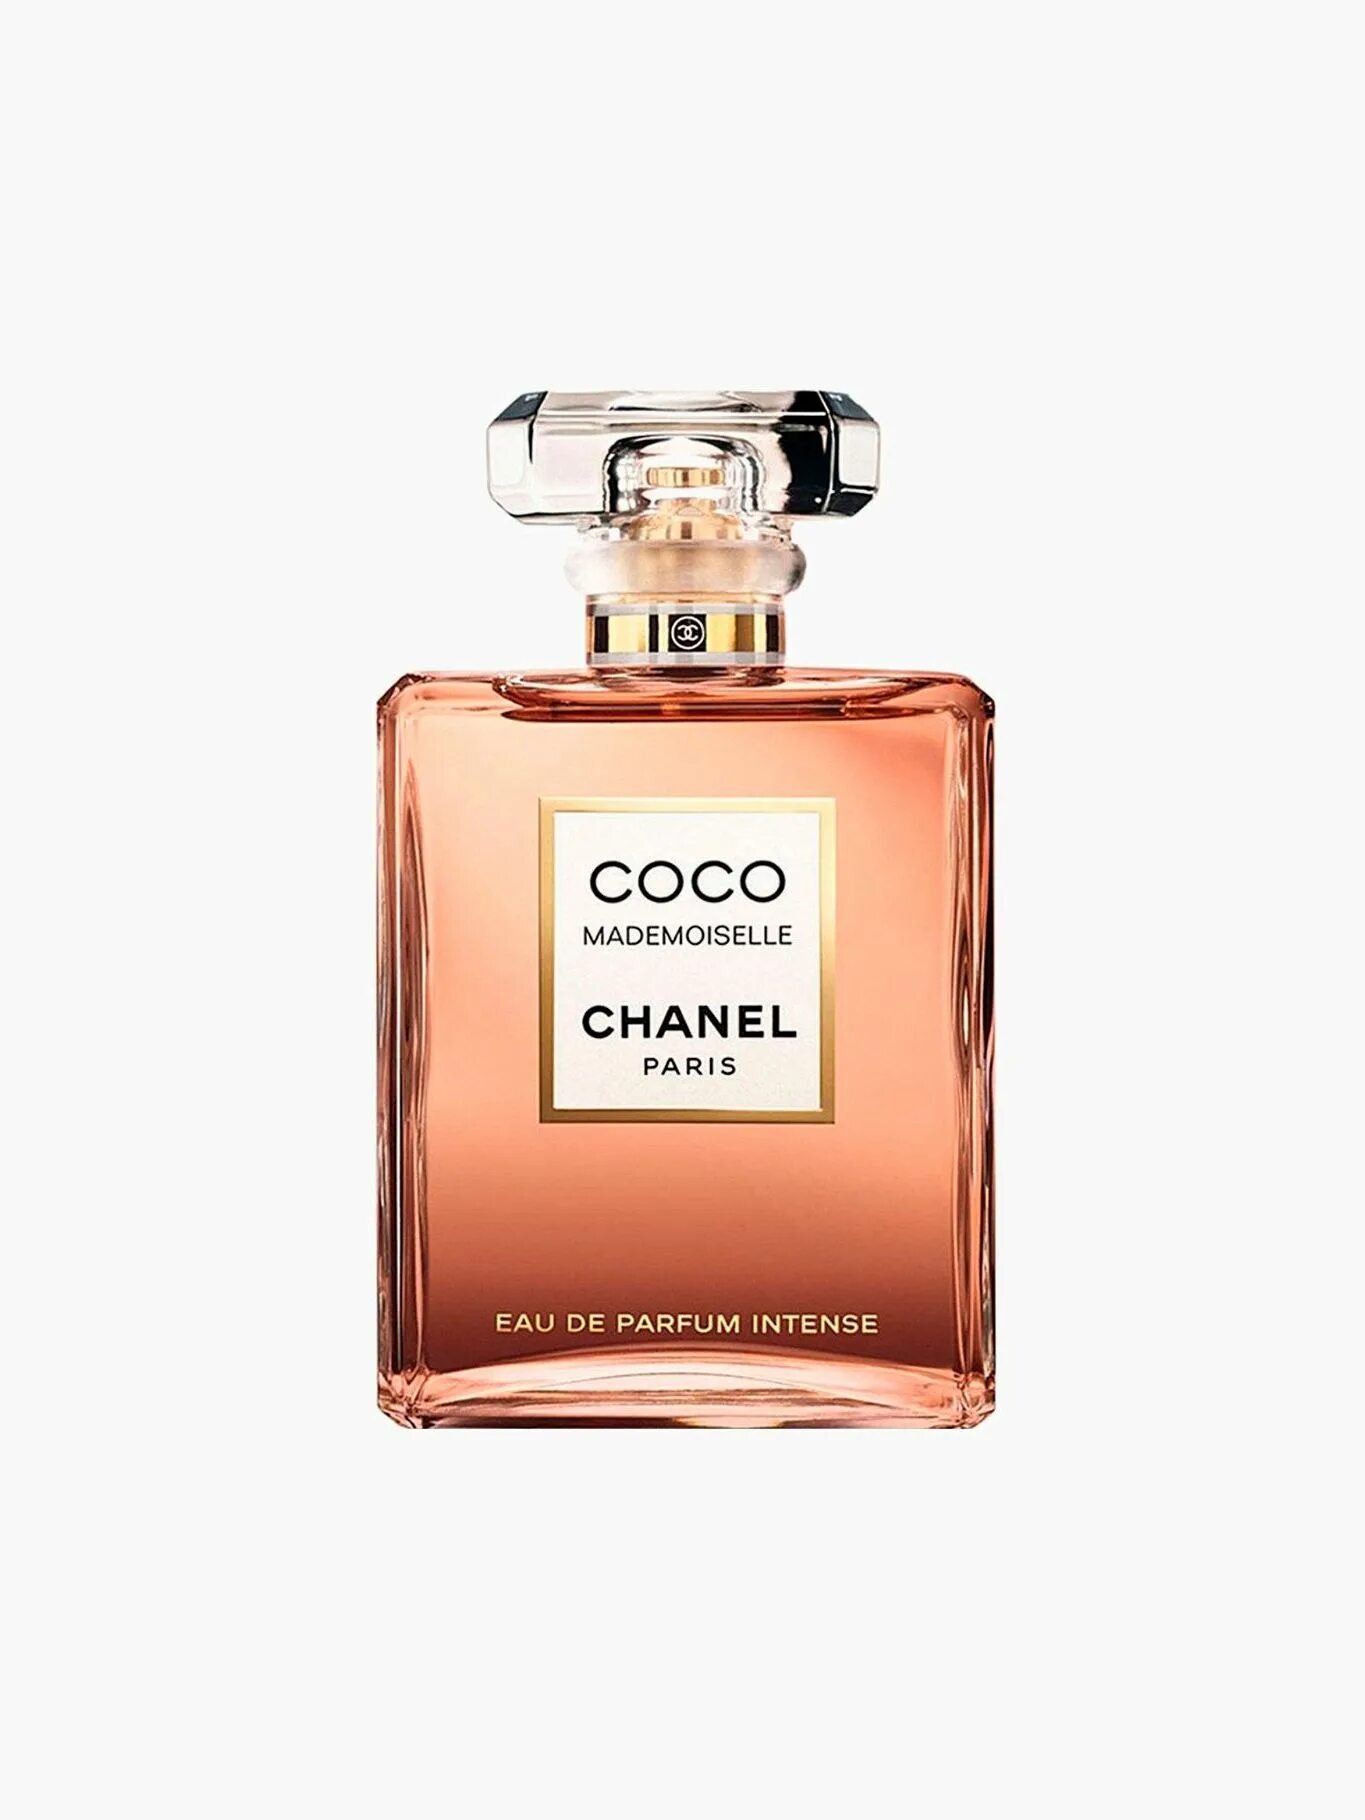 Chanel - Coco Mademoiselle EDP 100мл. Chanel Coco Mademoiselle intense 100ml. Chanel Coco Mademoiselle Parfum 30 ml. Chanel Coco Mademoiselle intense 35 мл.